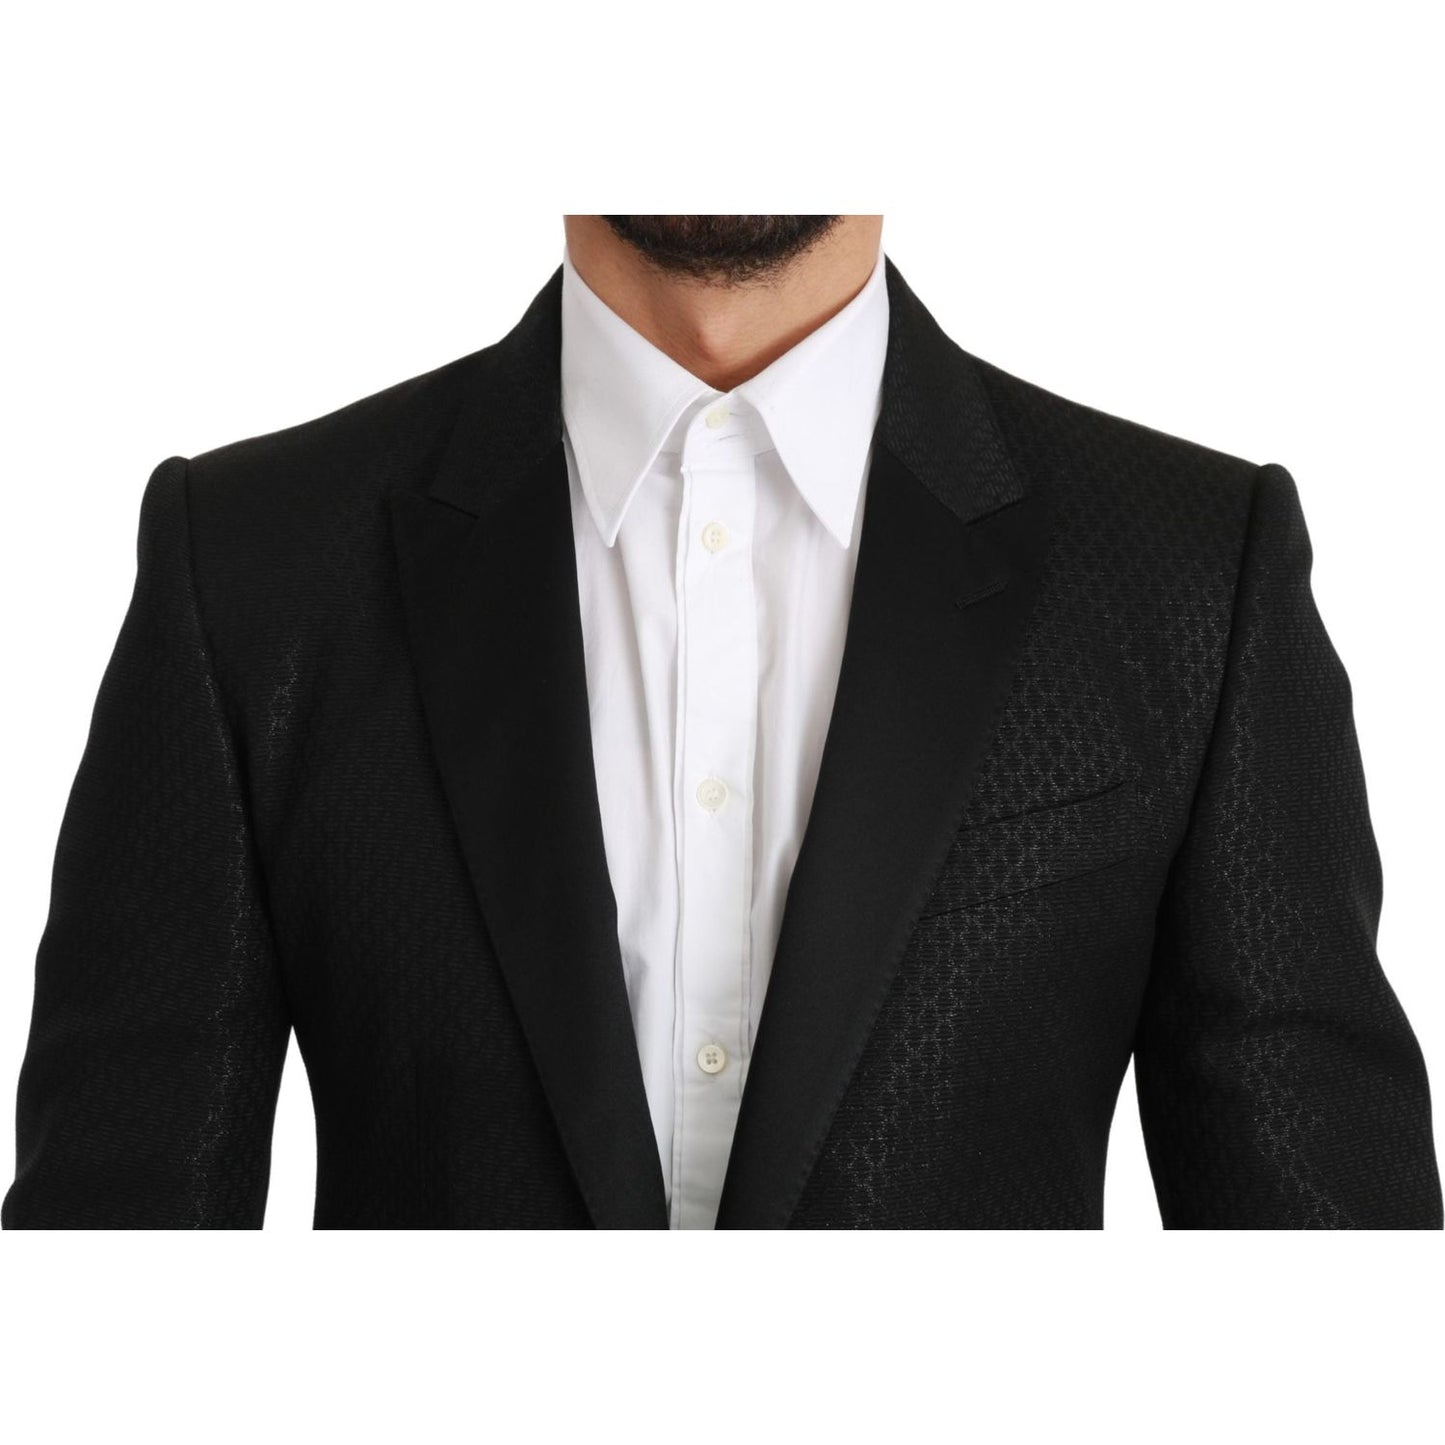 Dolce & Gabbana Slim Fit Martini Black Blazer Jacket black-slim-fit-jacket-martini-blazer Suit IMG_1016-scaled-33a89cb0-ced.jpg